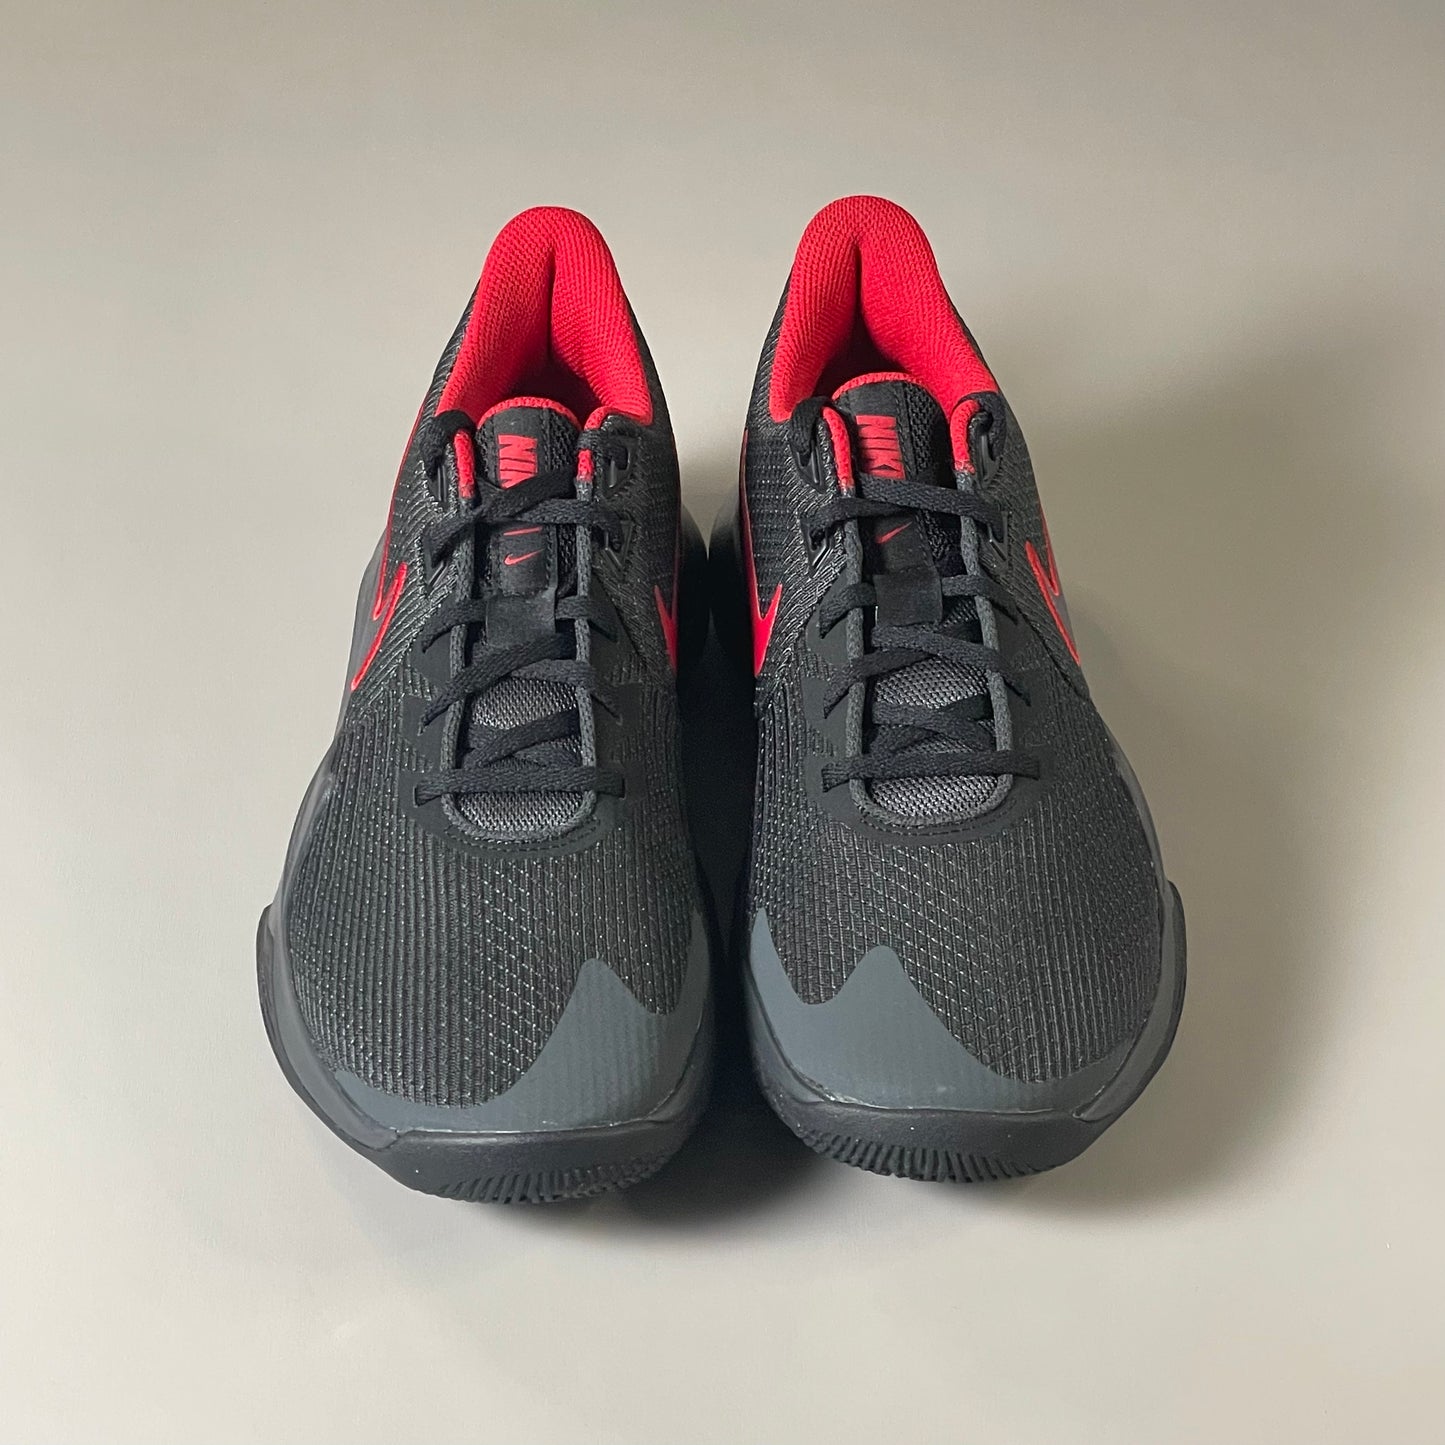 NIKE Precision 5 Basketball Shoes Men's Sz 11.5 Anthracite/Grey CW3403 007 (New)